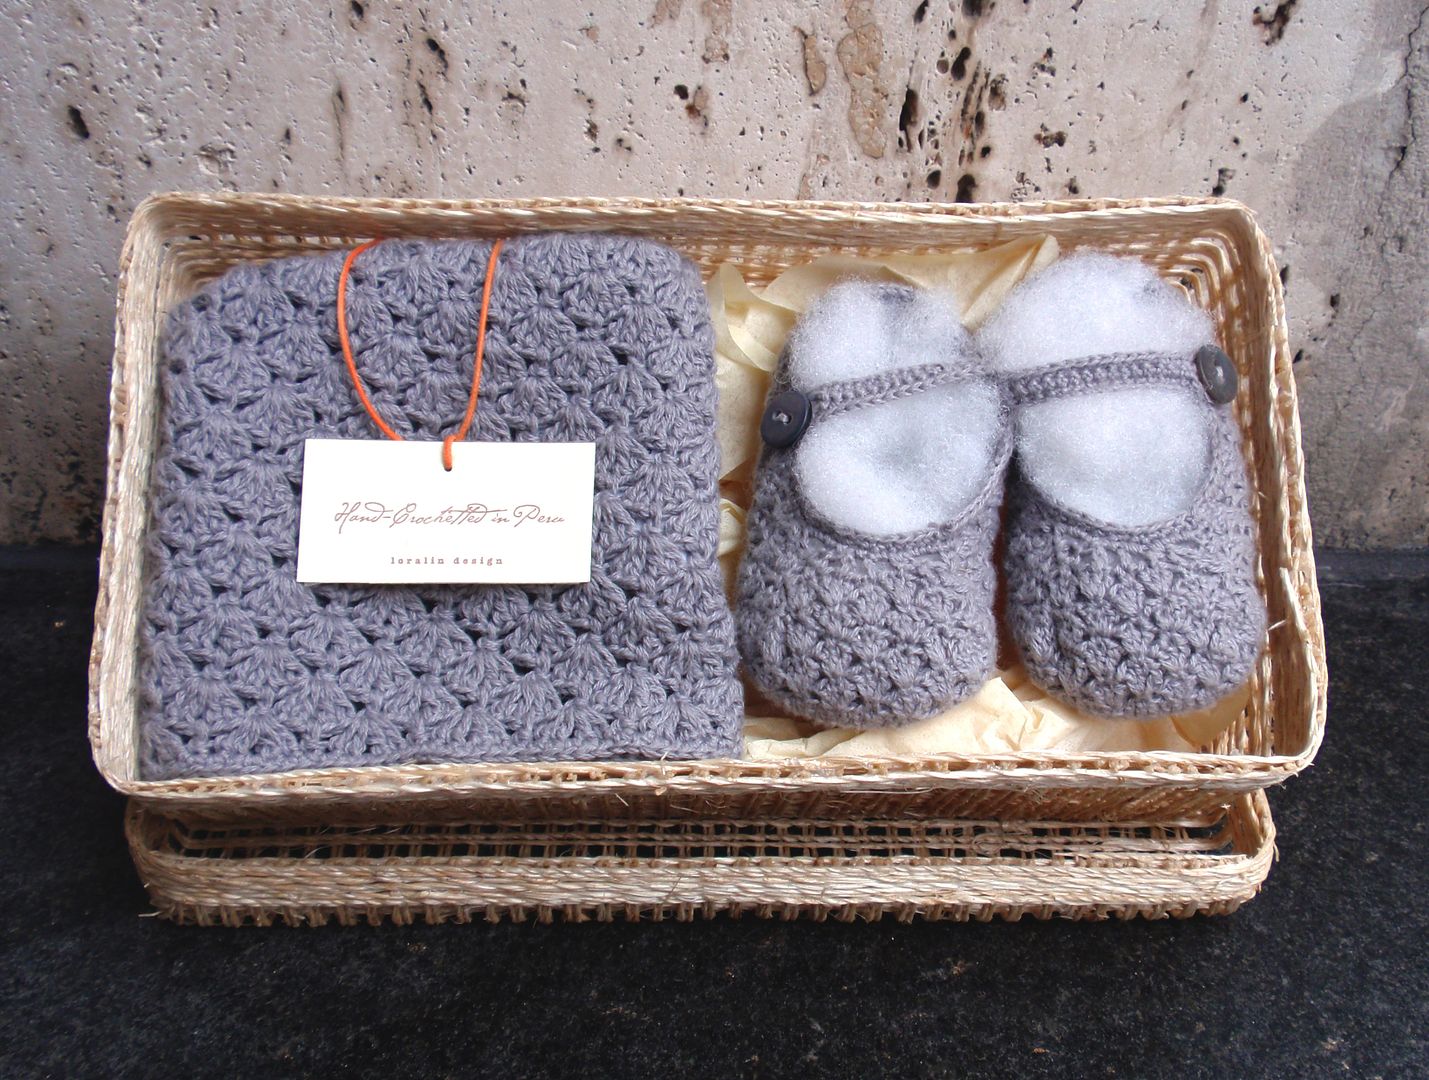 Crocheted baby gift set